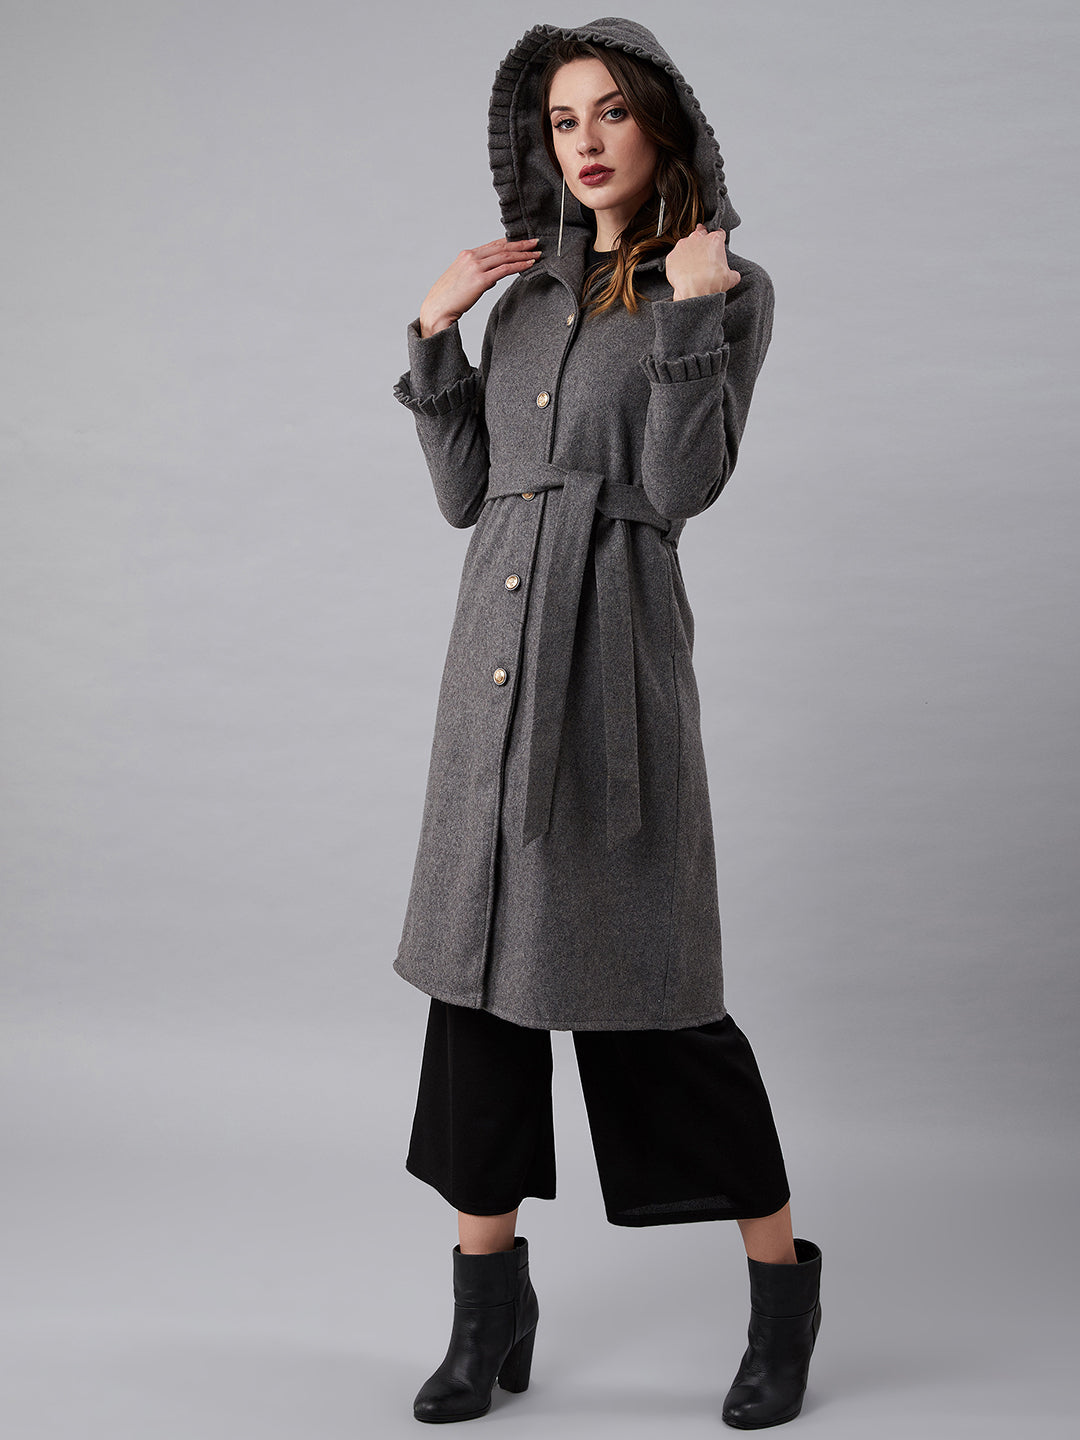 Athena Women Grey Solid Knee-Length Hooded Overcoat - Athena Lifestyle